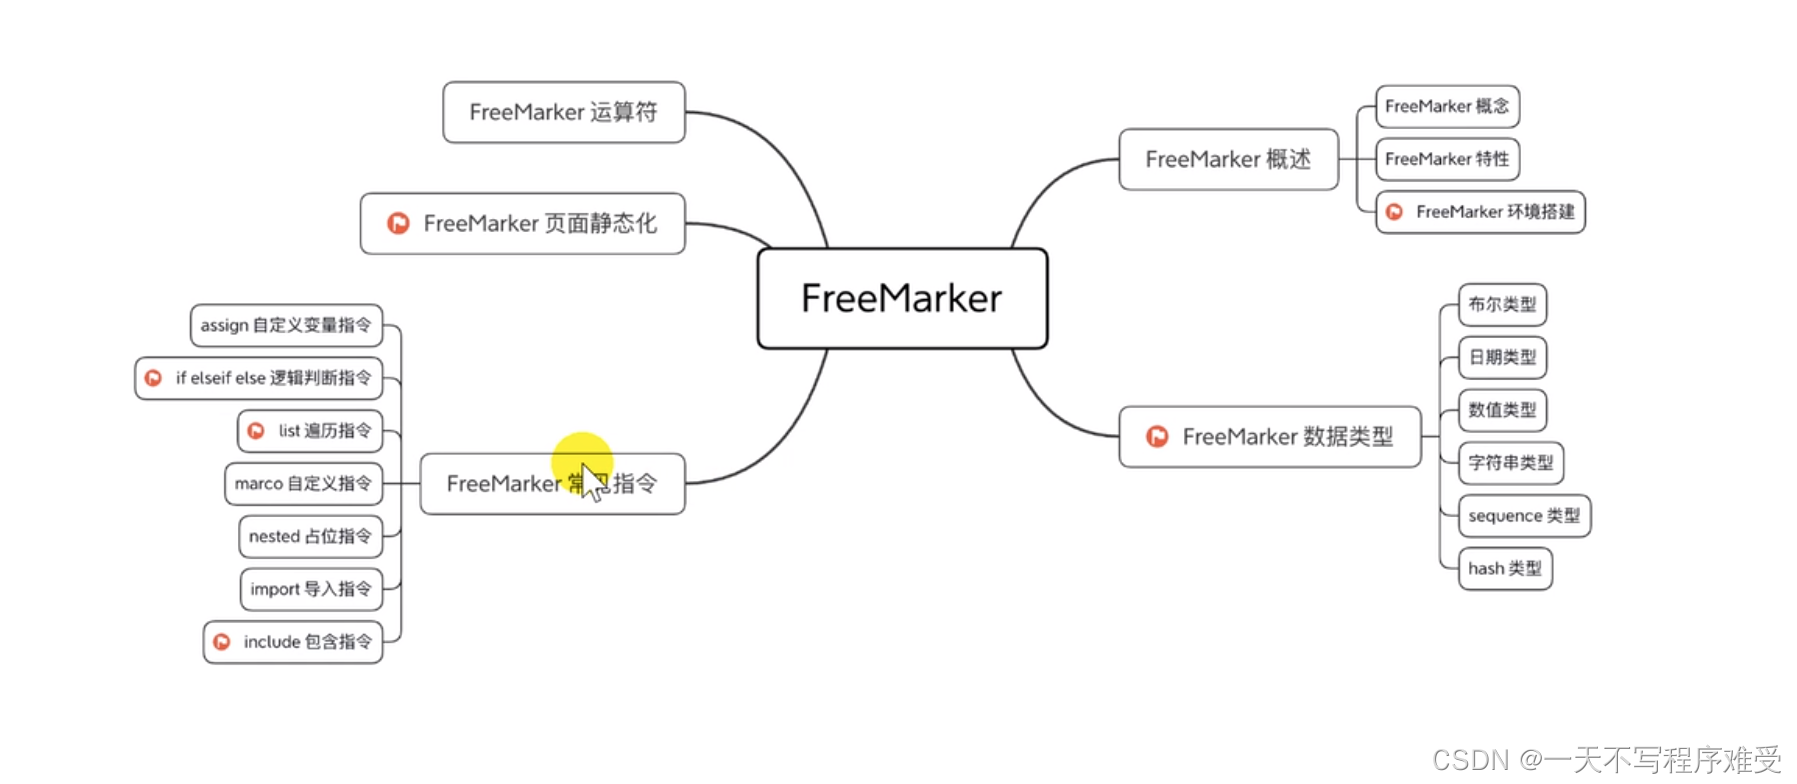 java spring boot- freemarker 配置 yml使用流程 - 走看看